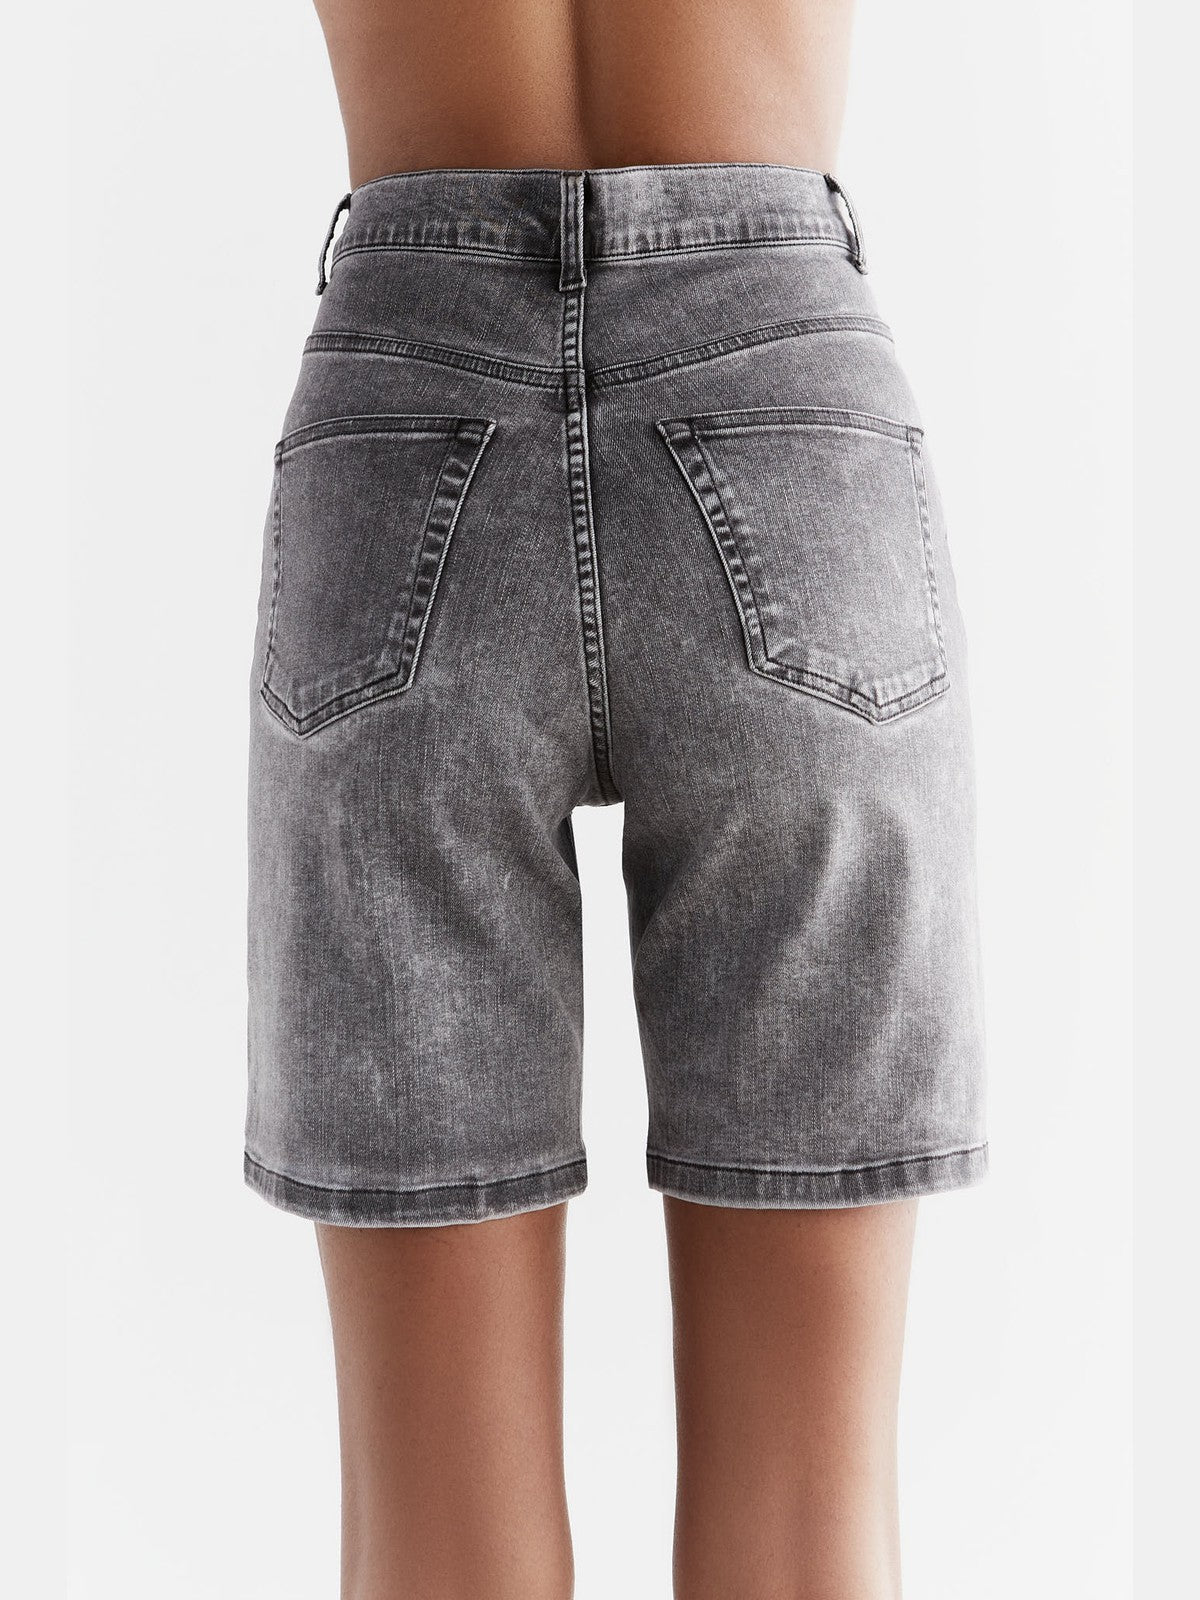 WA3015-163 | Women Denim Shorts - Iron Gray